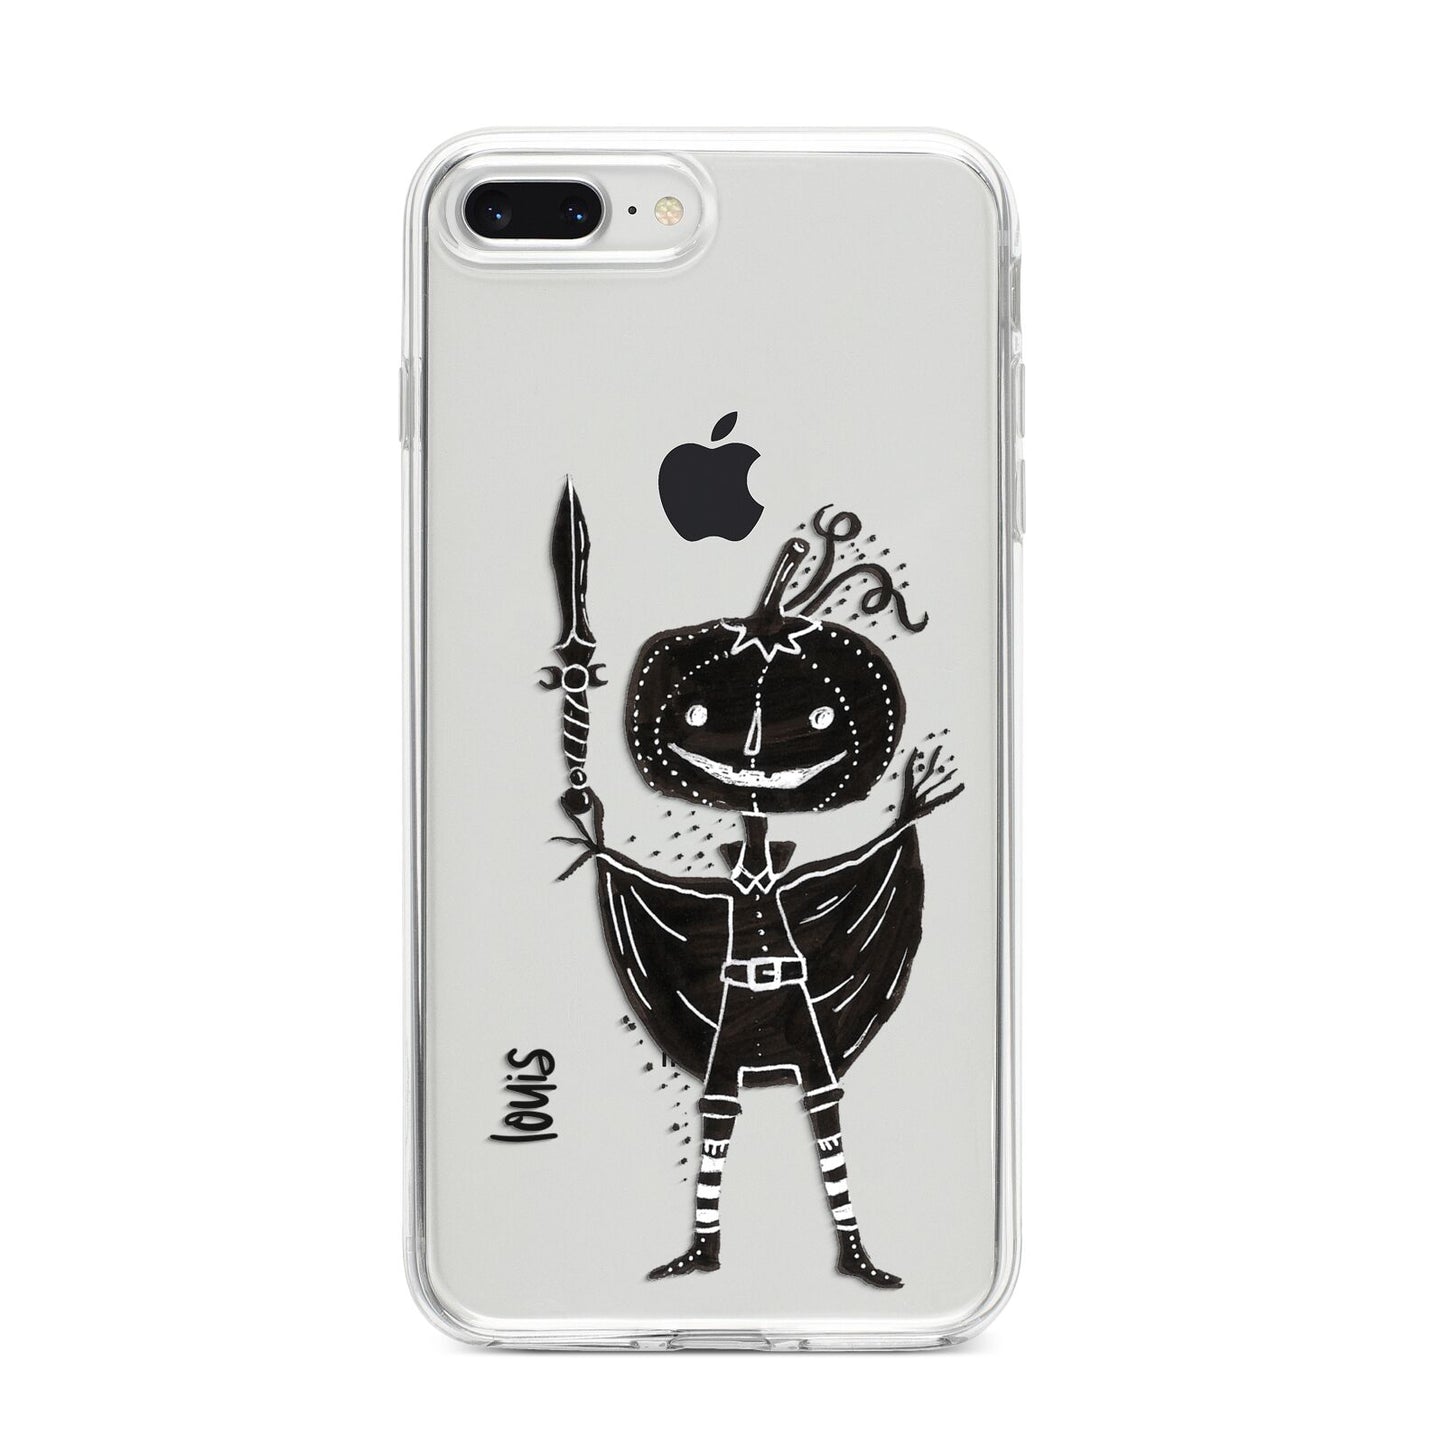 Pumpkin Head Personalised iPhone 8 Plus Bumper Case on Silver iPhone